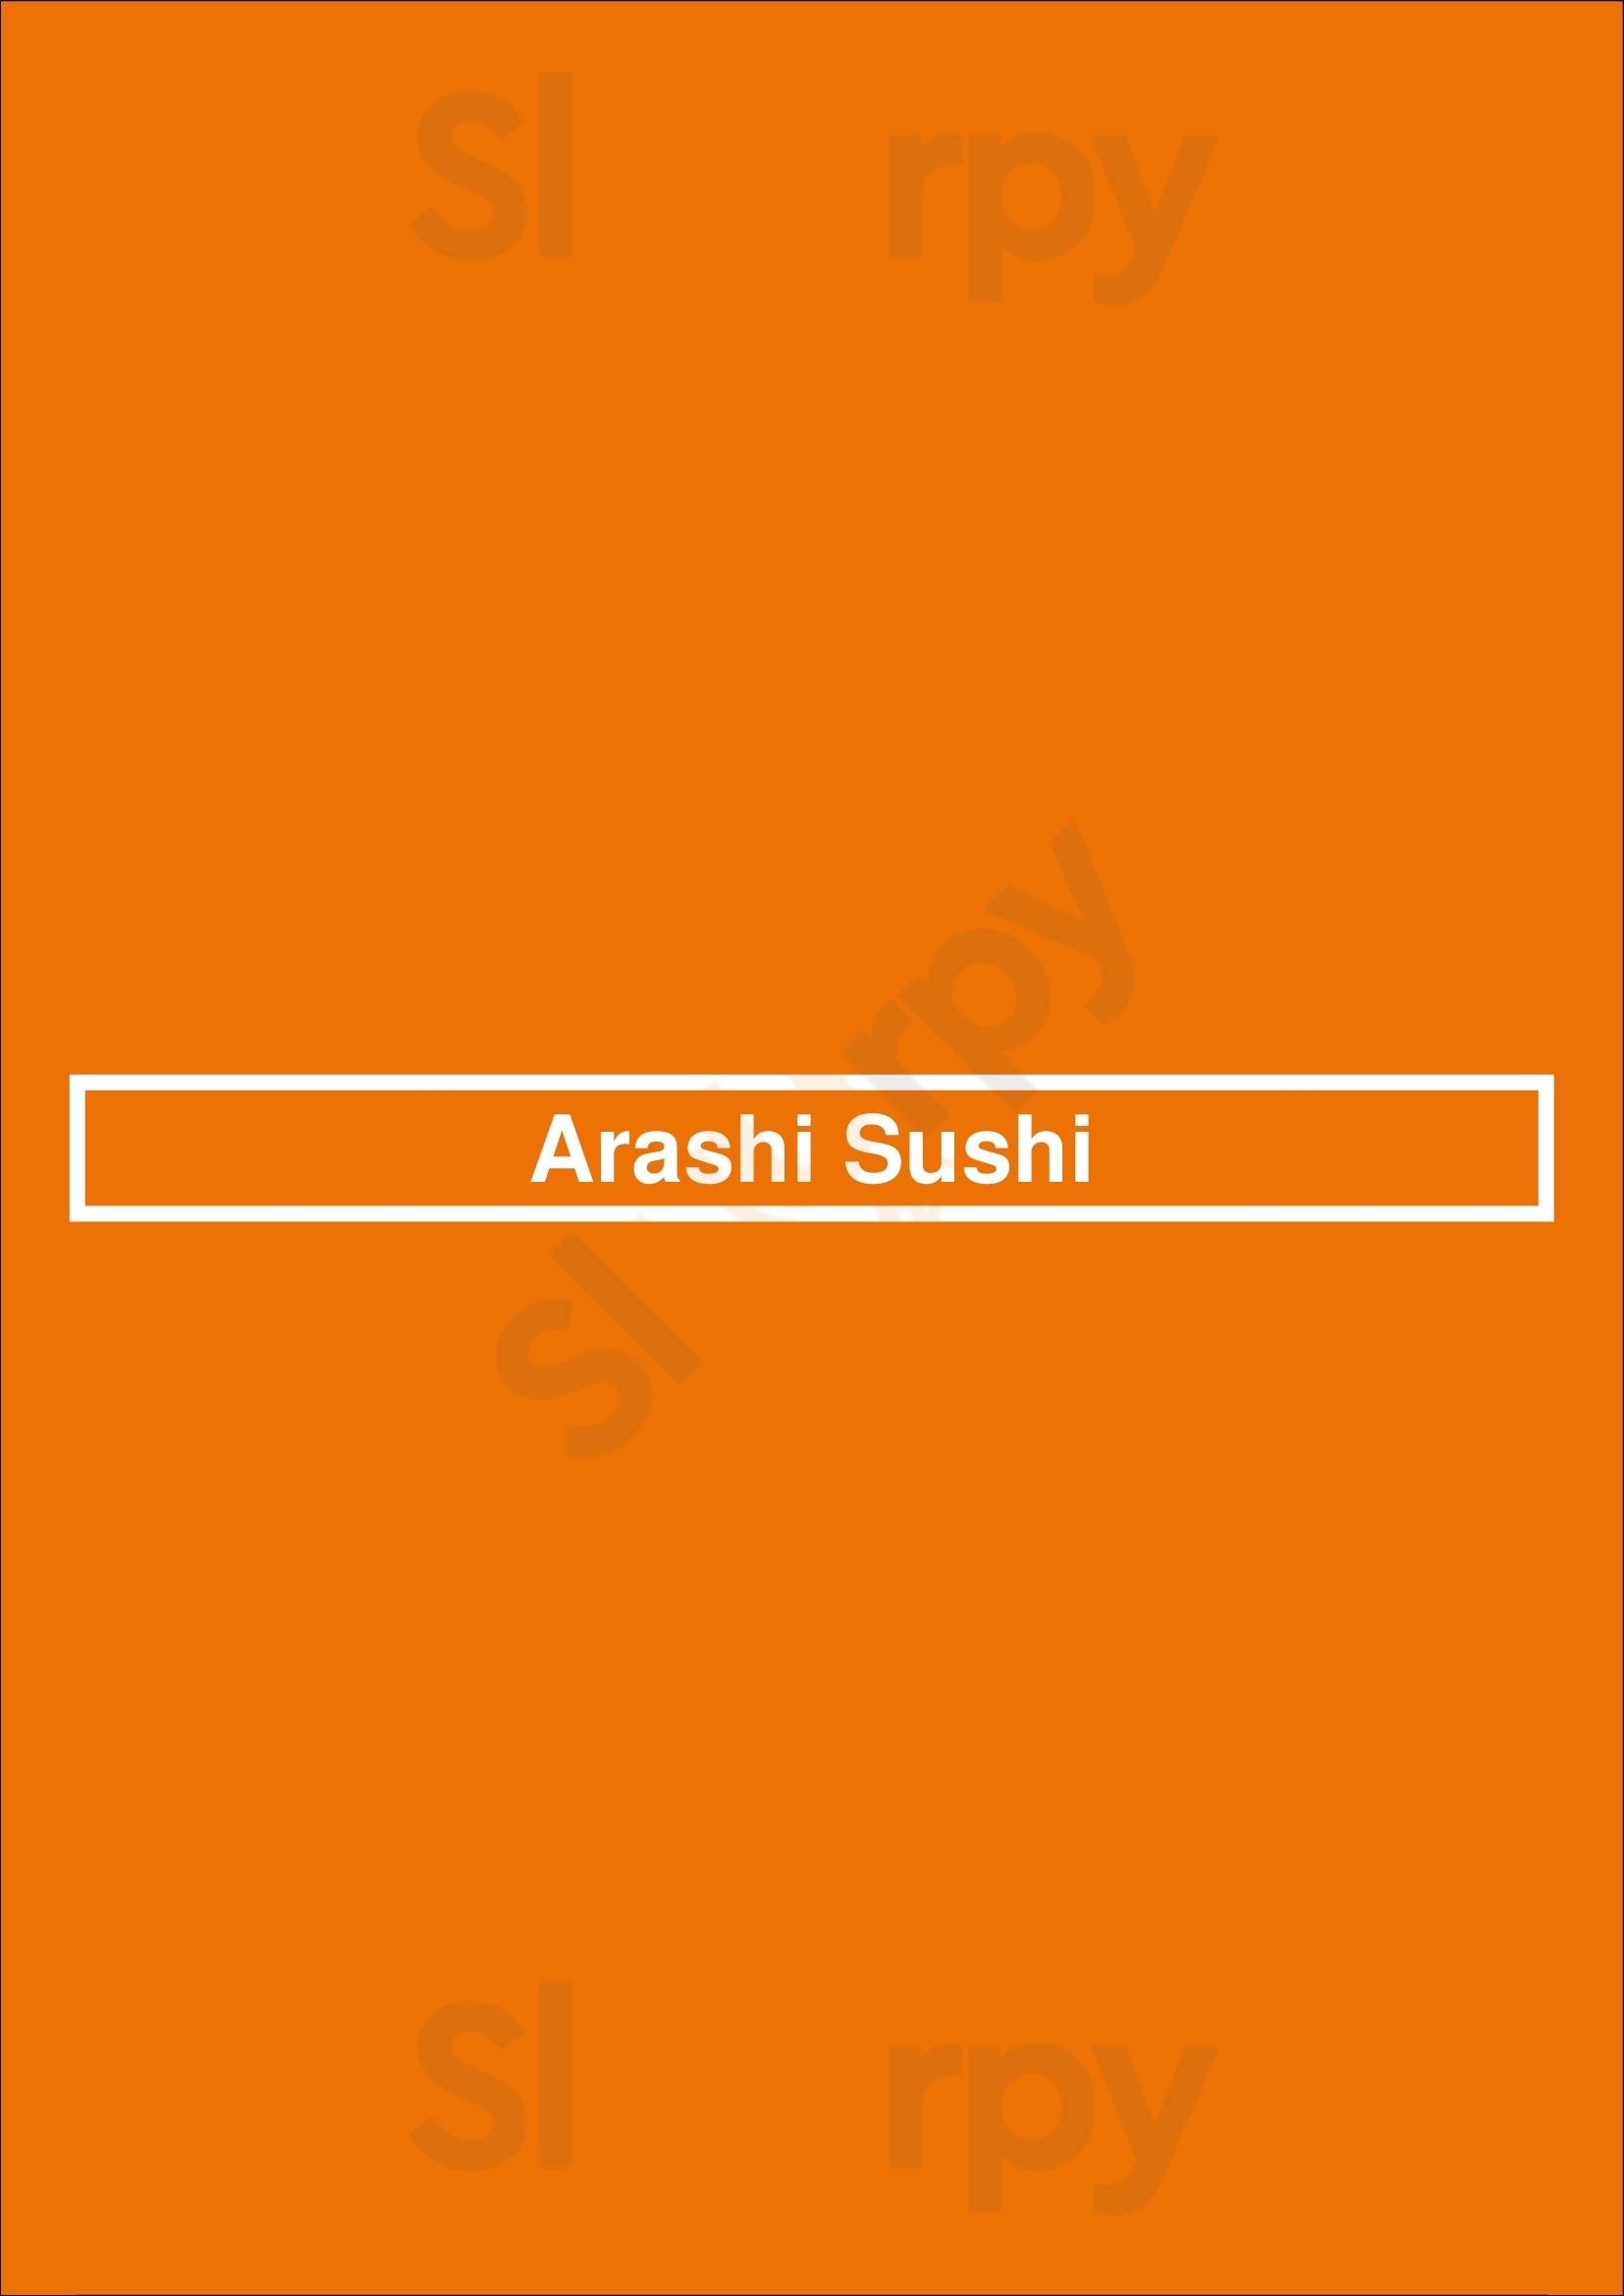 Arashi Sushi Los Angeles Menu - 1